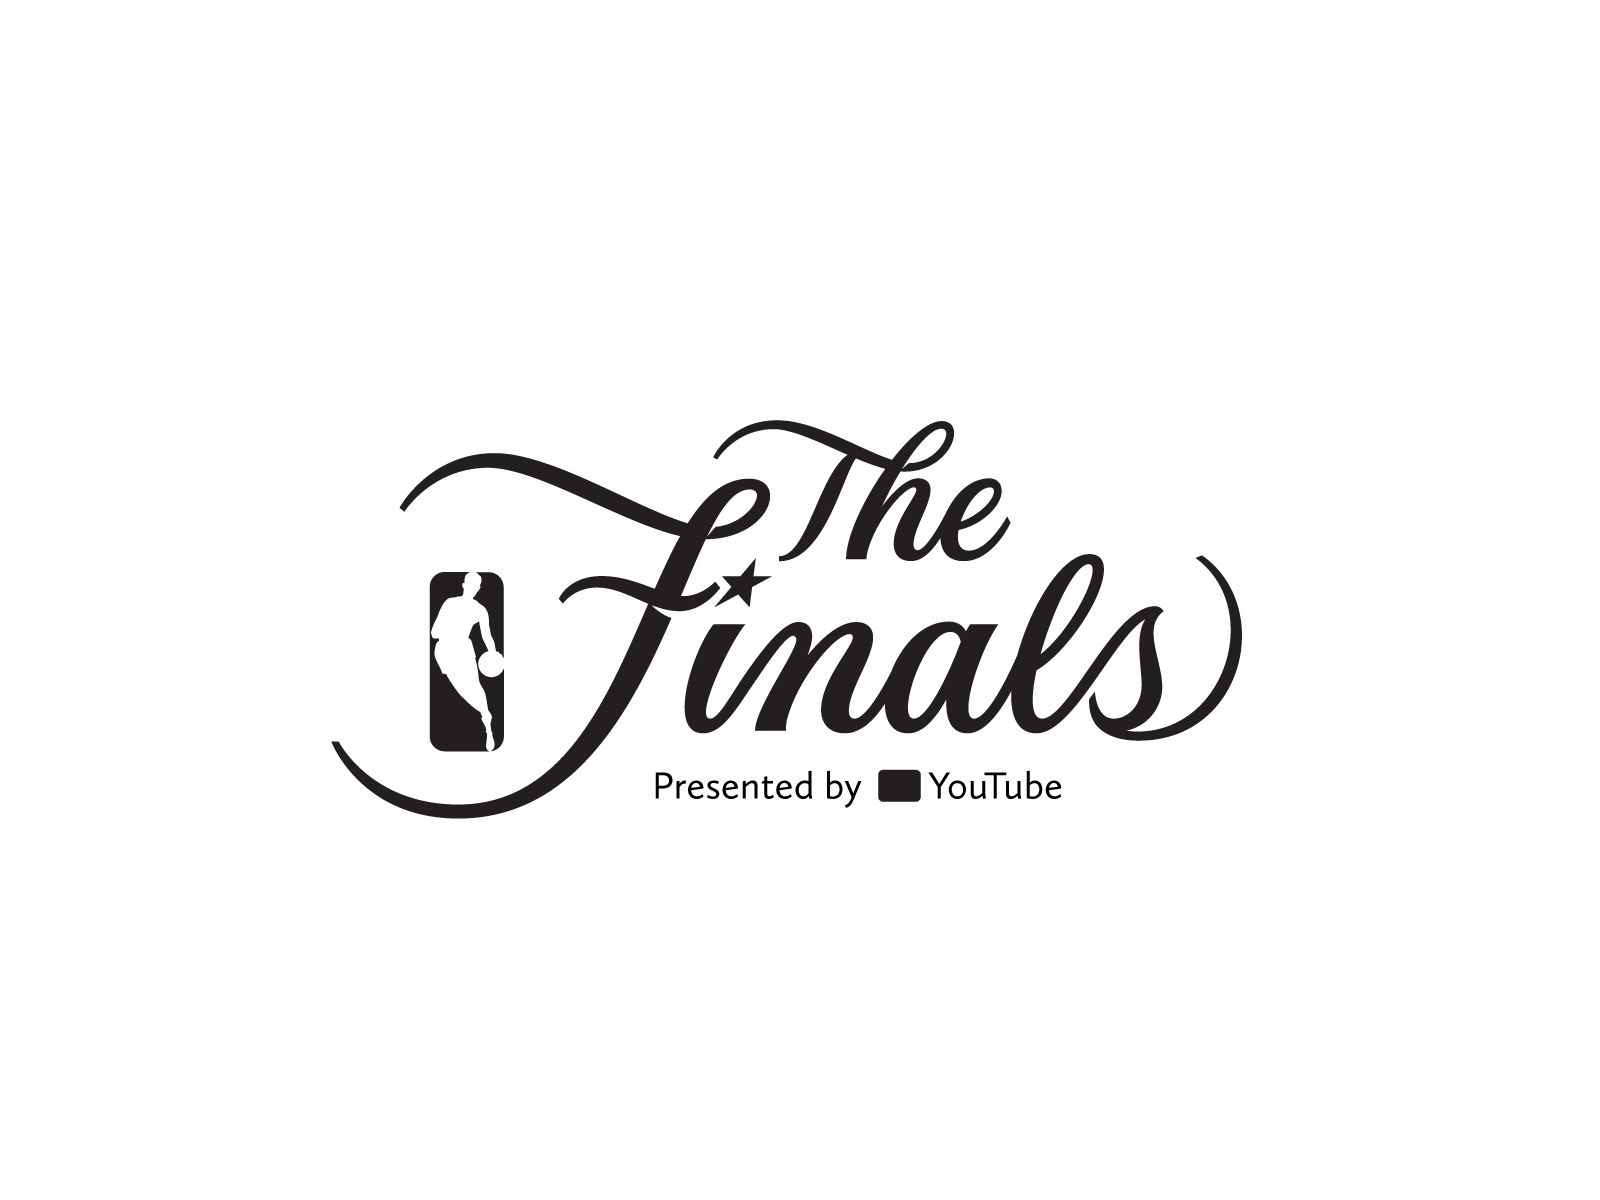 NBA Finals brings back script typeface in logo design - NewscastStudio